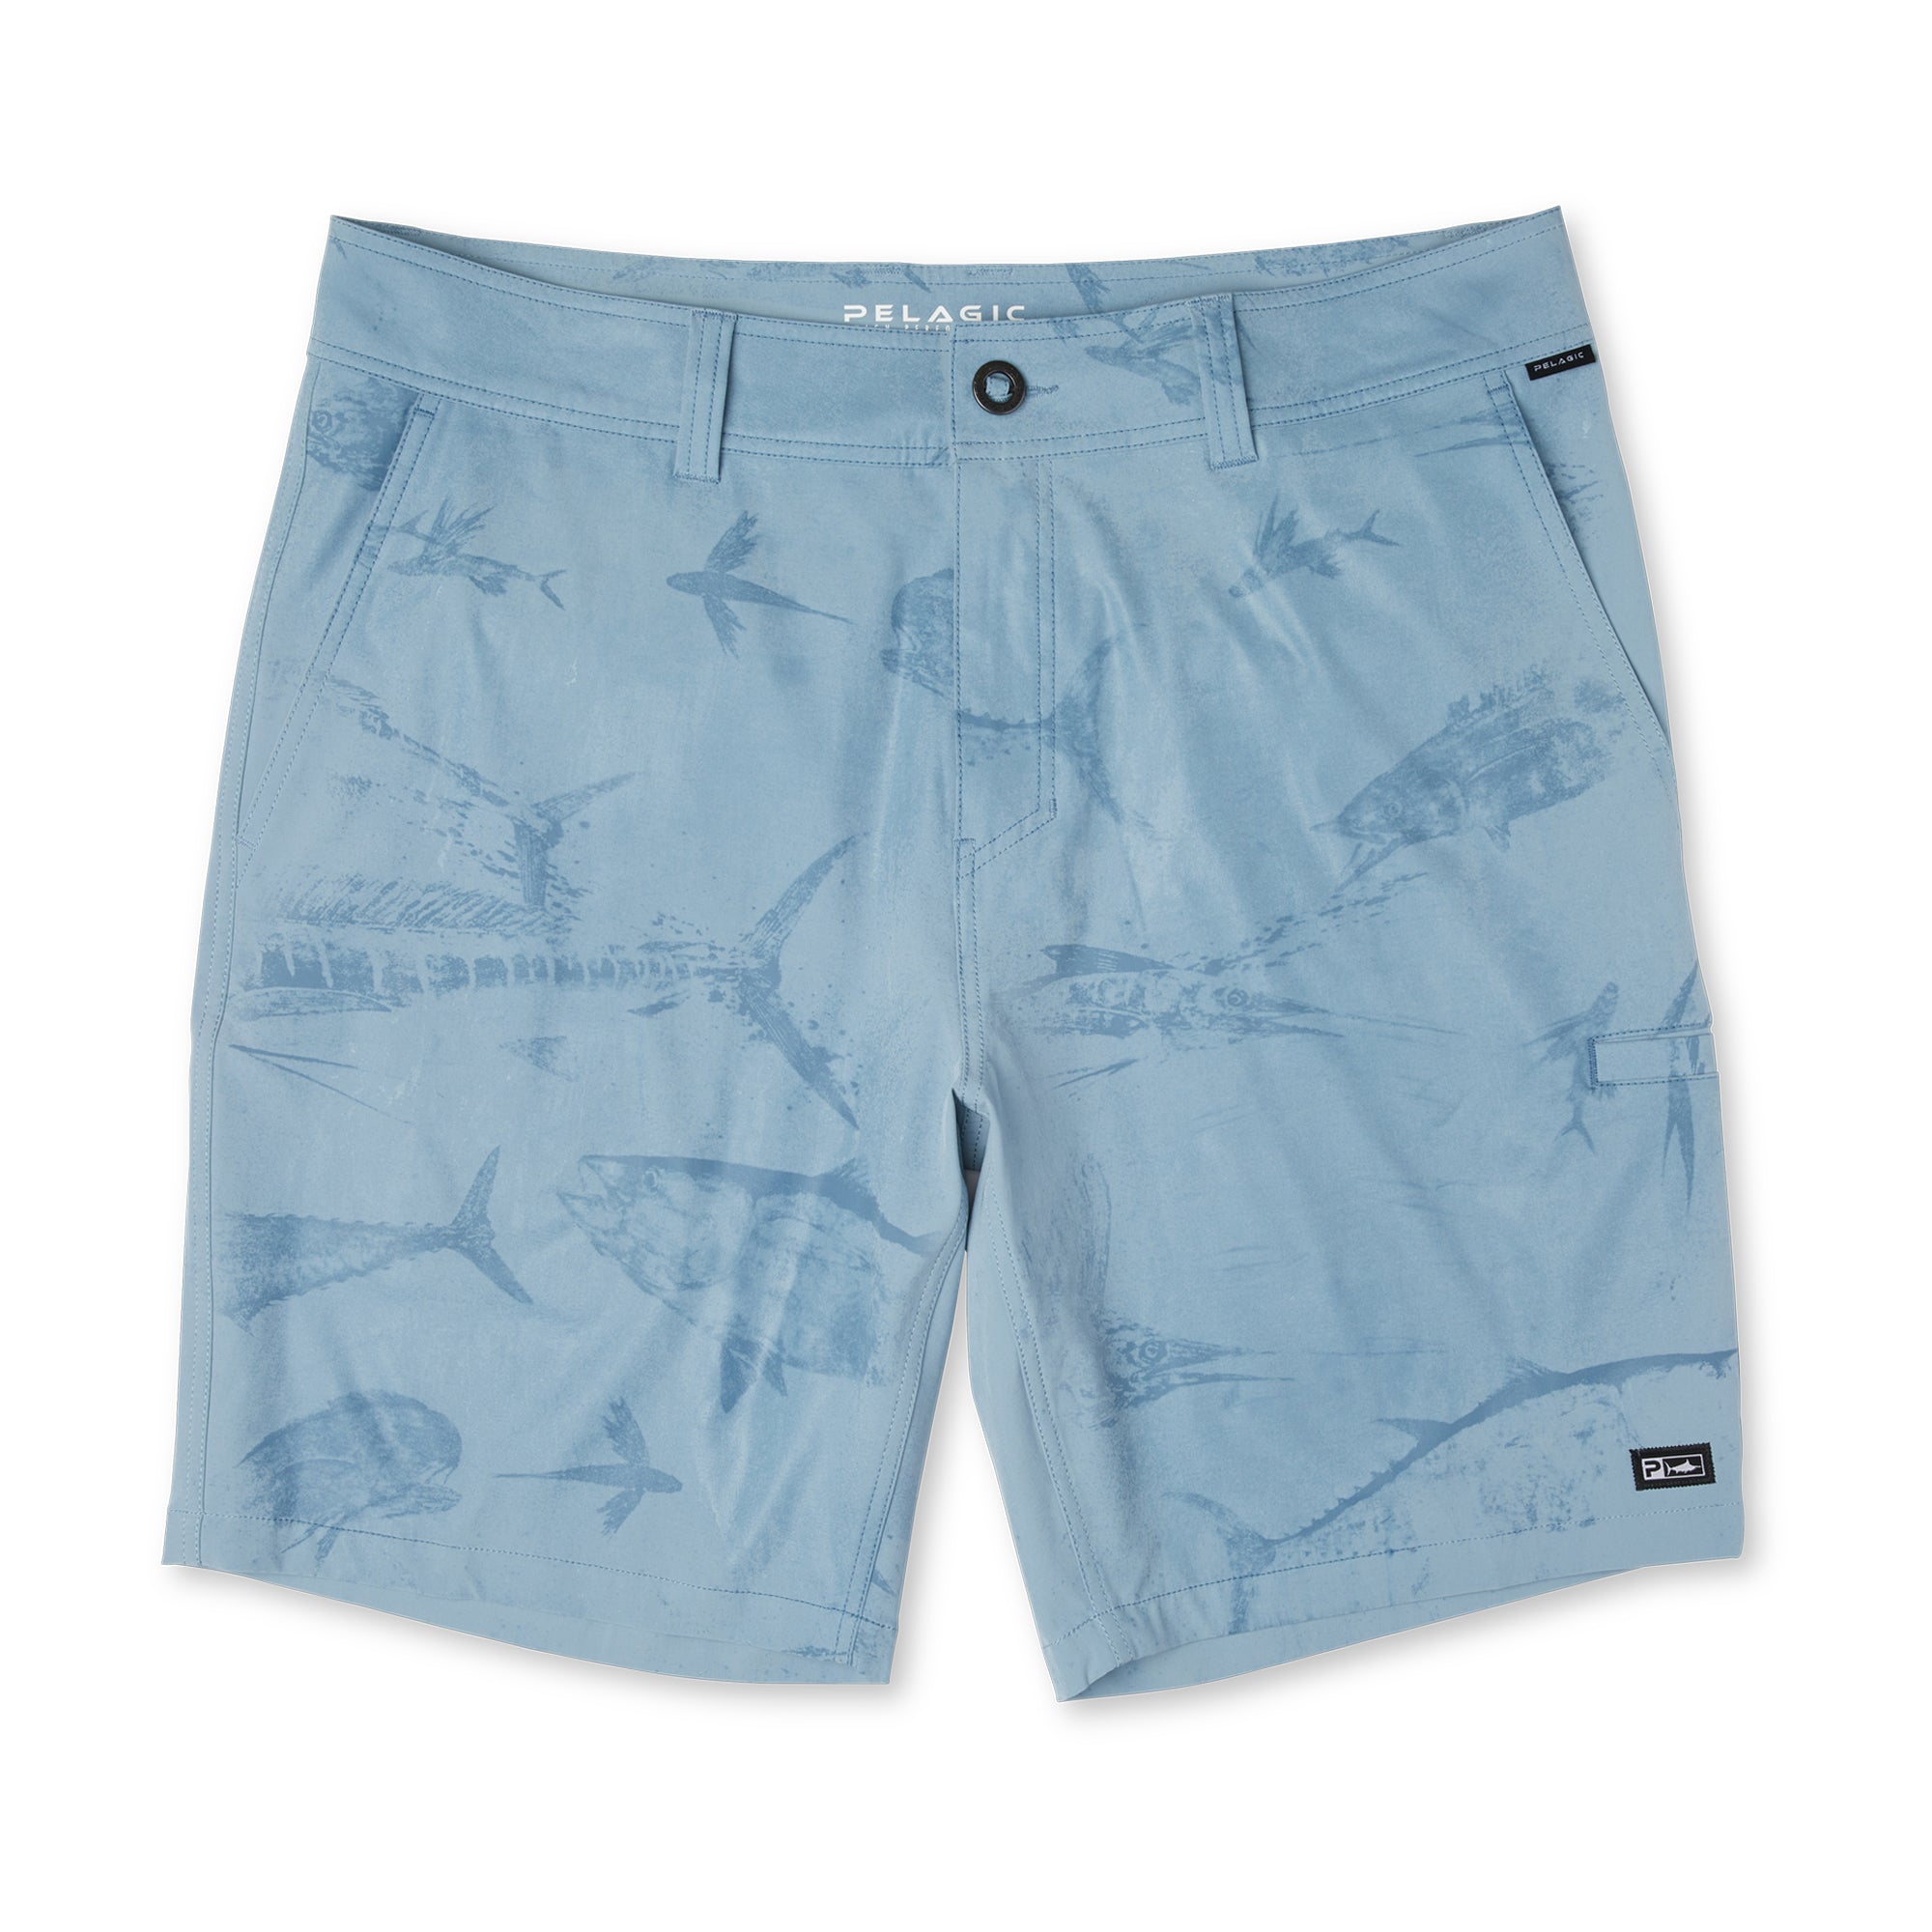 Deep Sea Fishing Shorts, H20 Activated Fabric